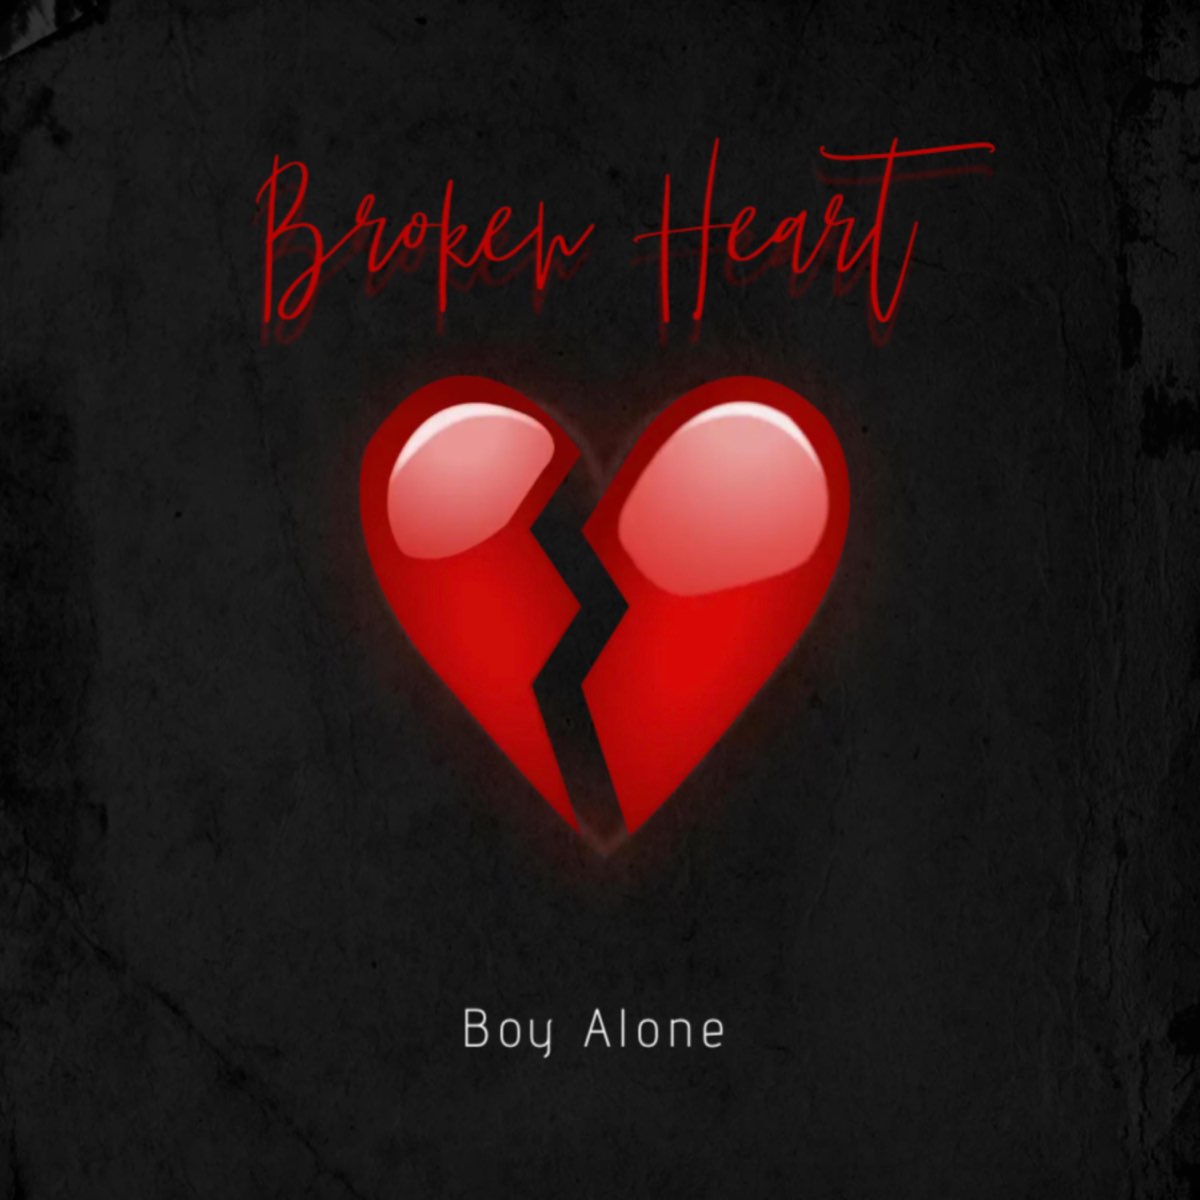 Broken & alone heart